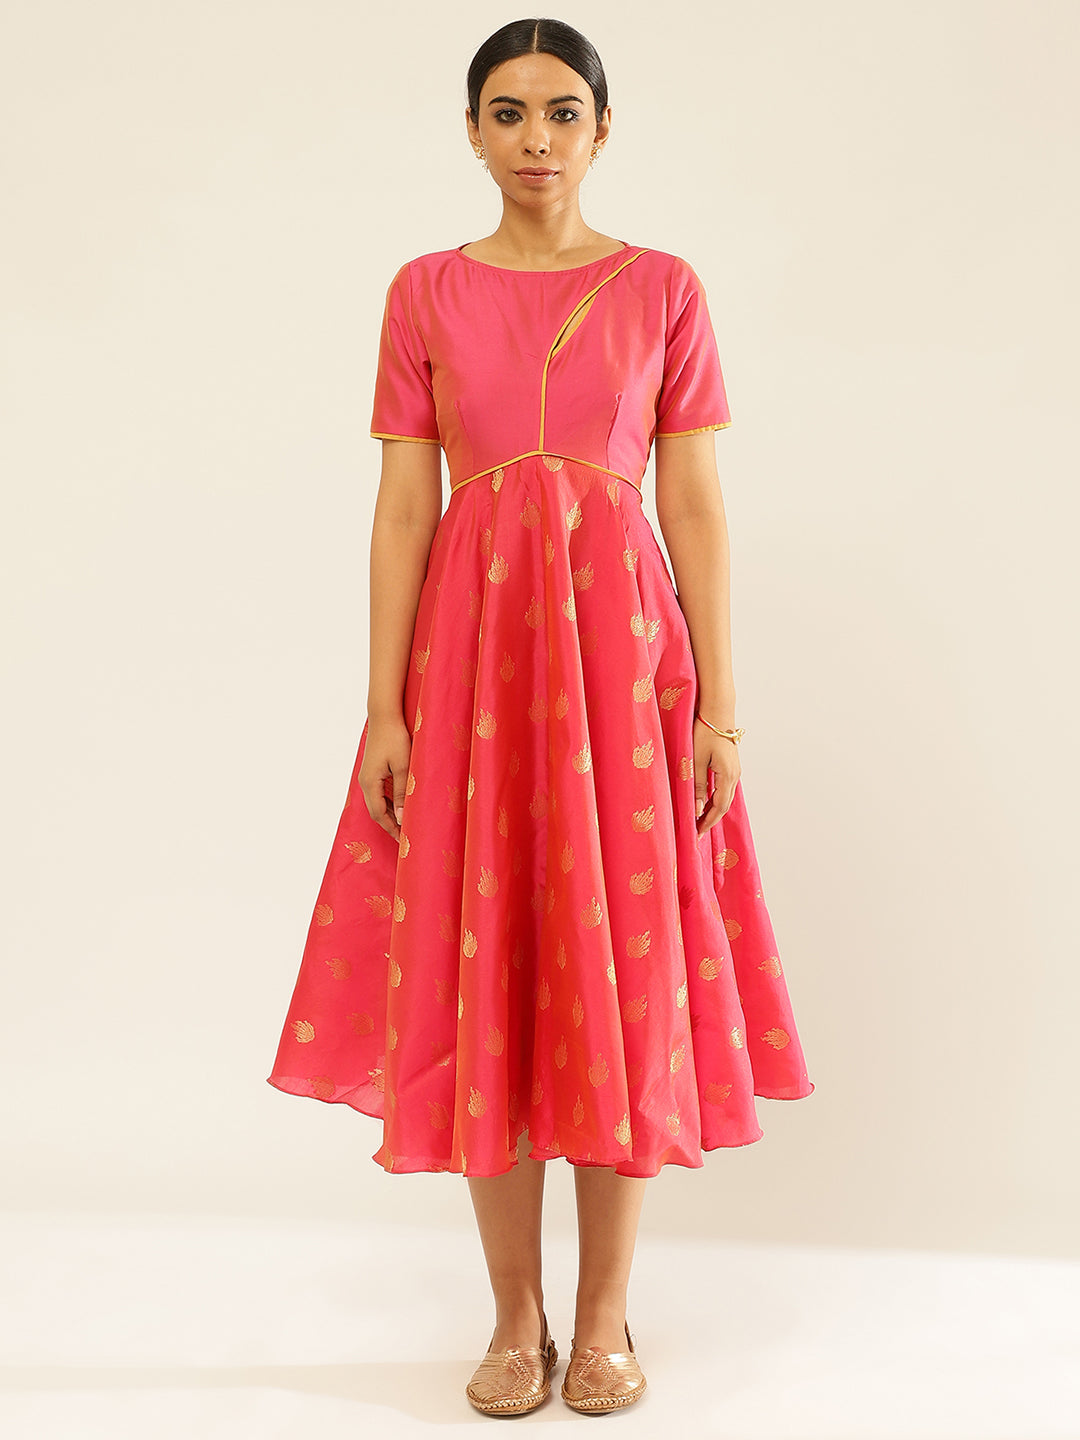 Zari Tafetta Circular Dress With Keyhole Neckline-Coral Pink